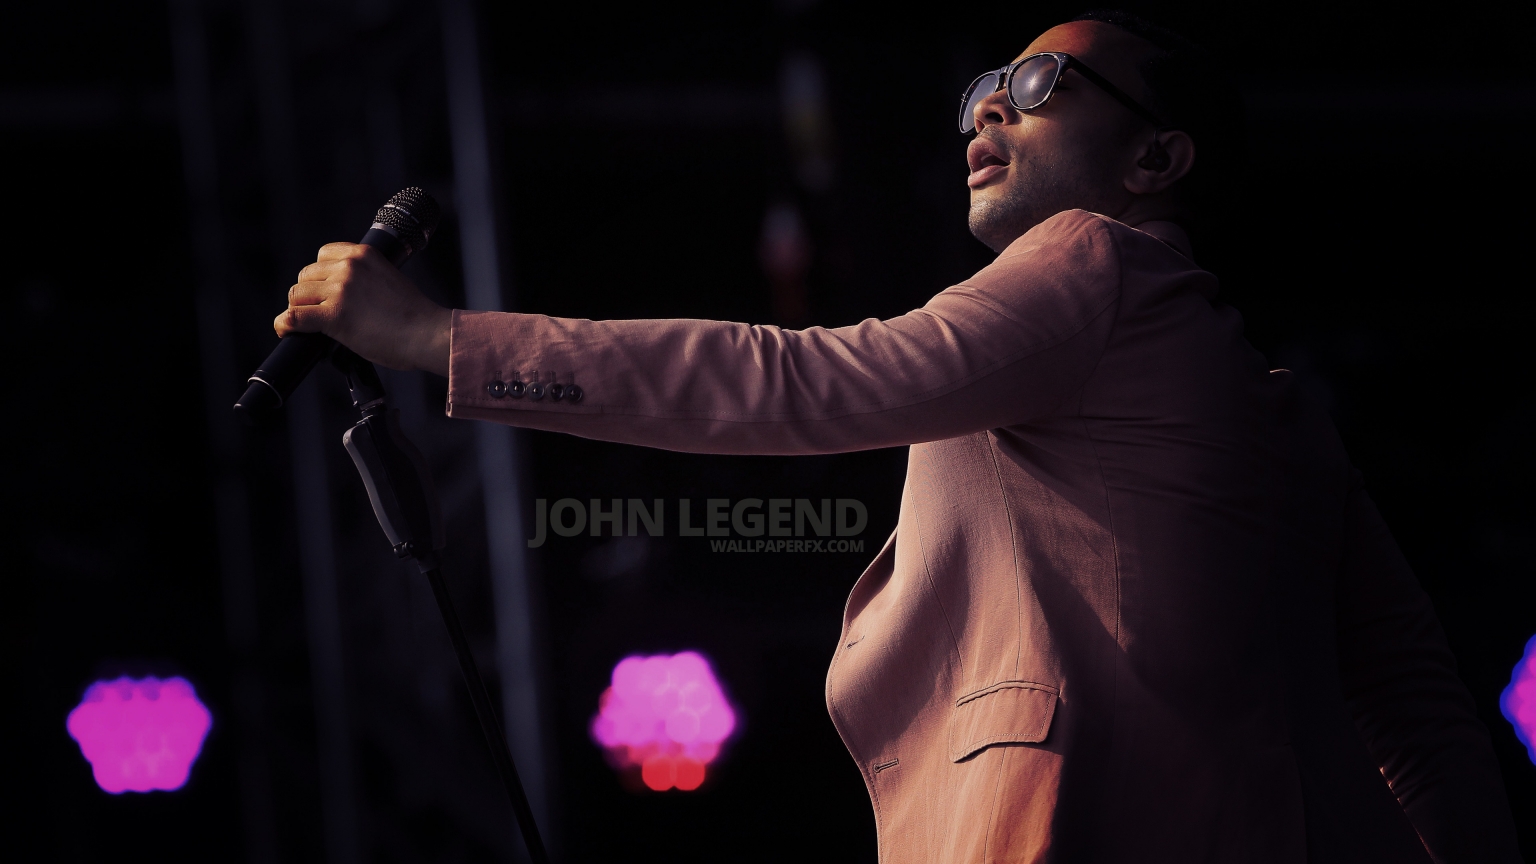 John Legend on Stage for 1536 x 864 HDTV resolution